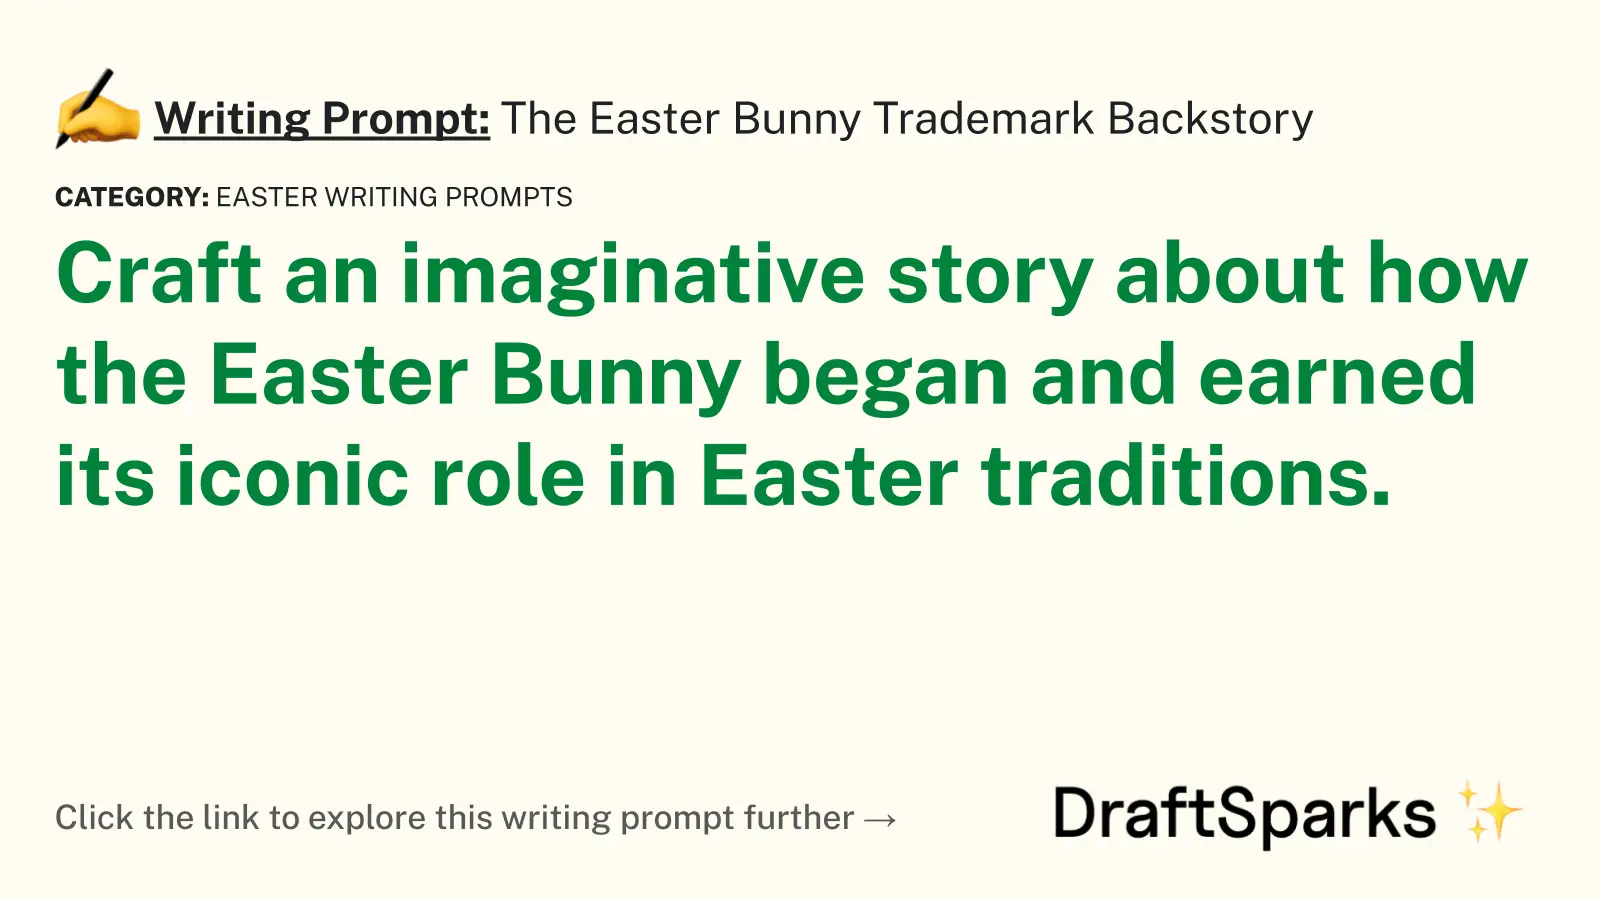 The Easter Bunny Trademark Backstory